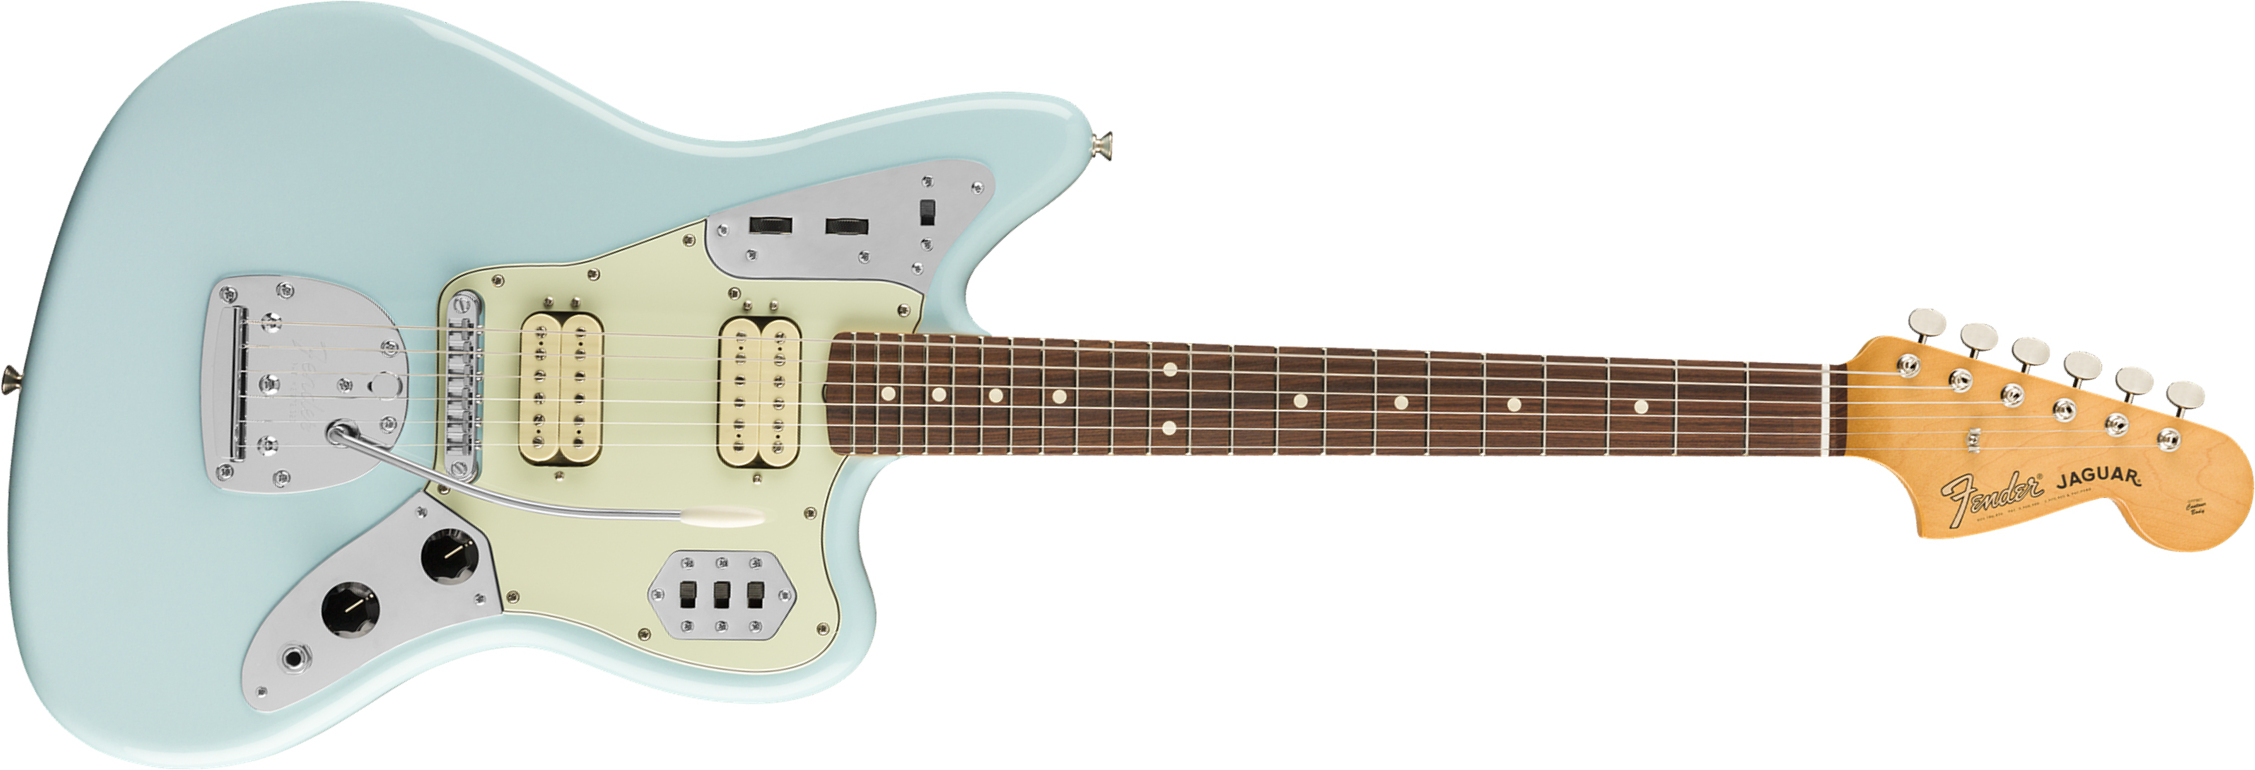 Fender Jaguar 60s Vintera Modified Hh Mex Pf - Sonic Blue - Retro rock electric guitar - Main picture